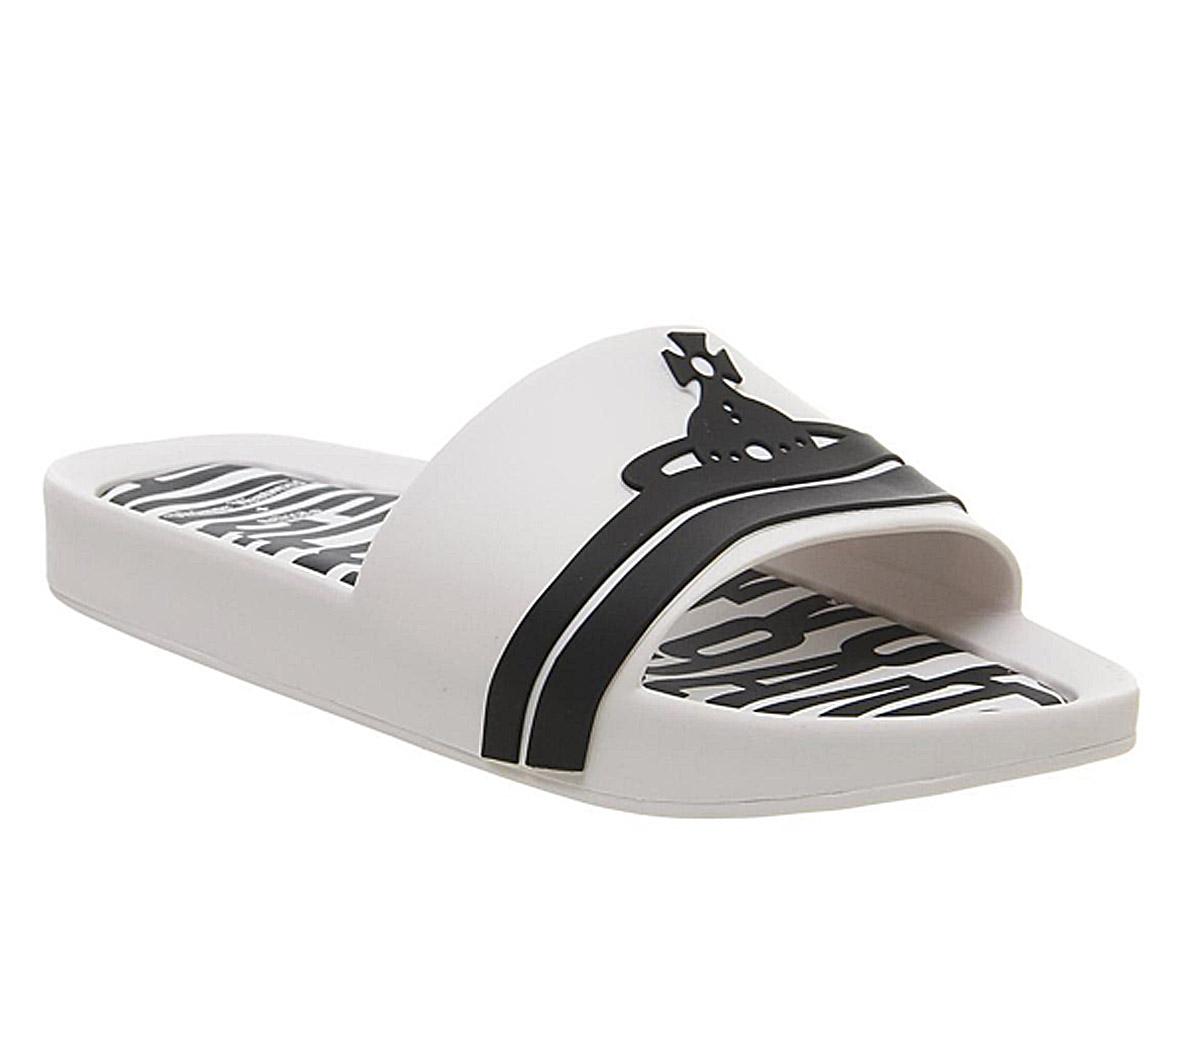 Vivienne Westwood Vw Beach Slides White Contrast - Sandals